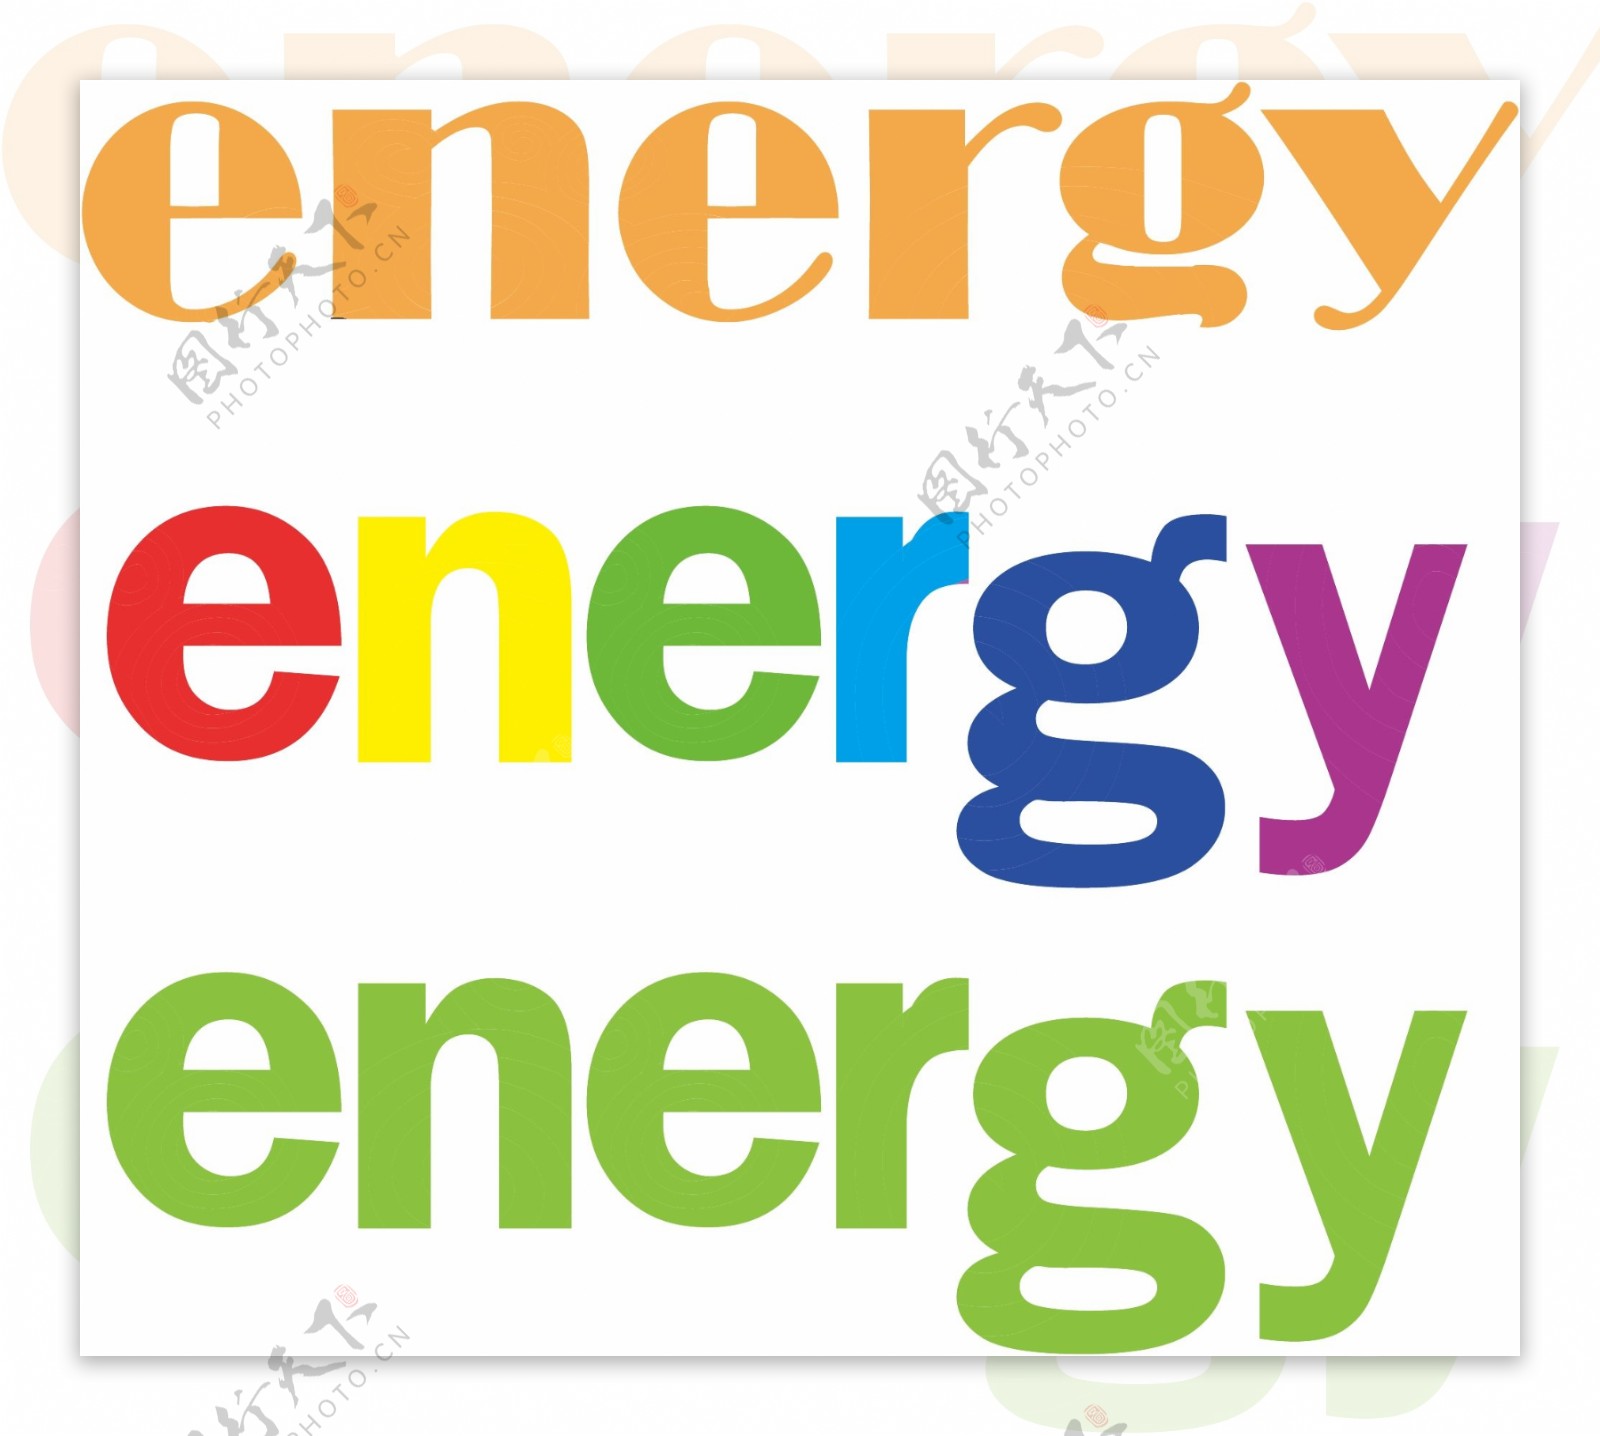 energy衍纸艺术图片